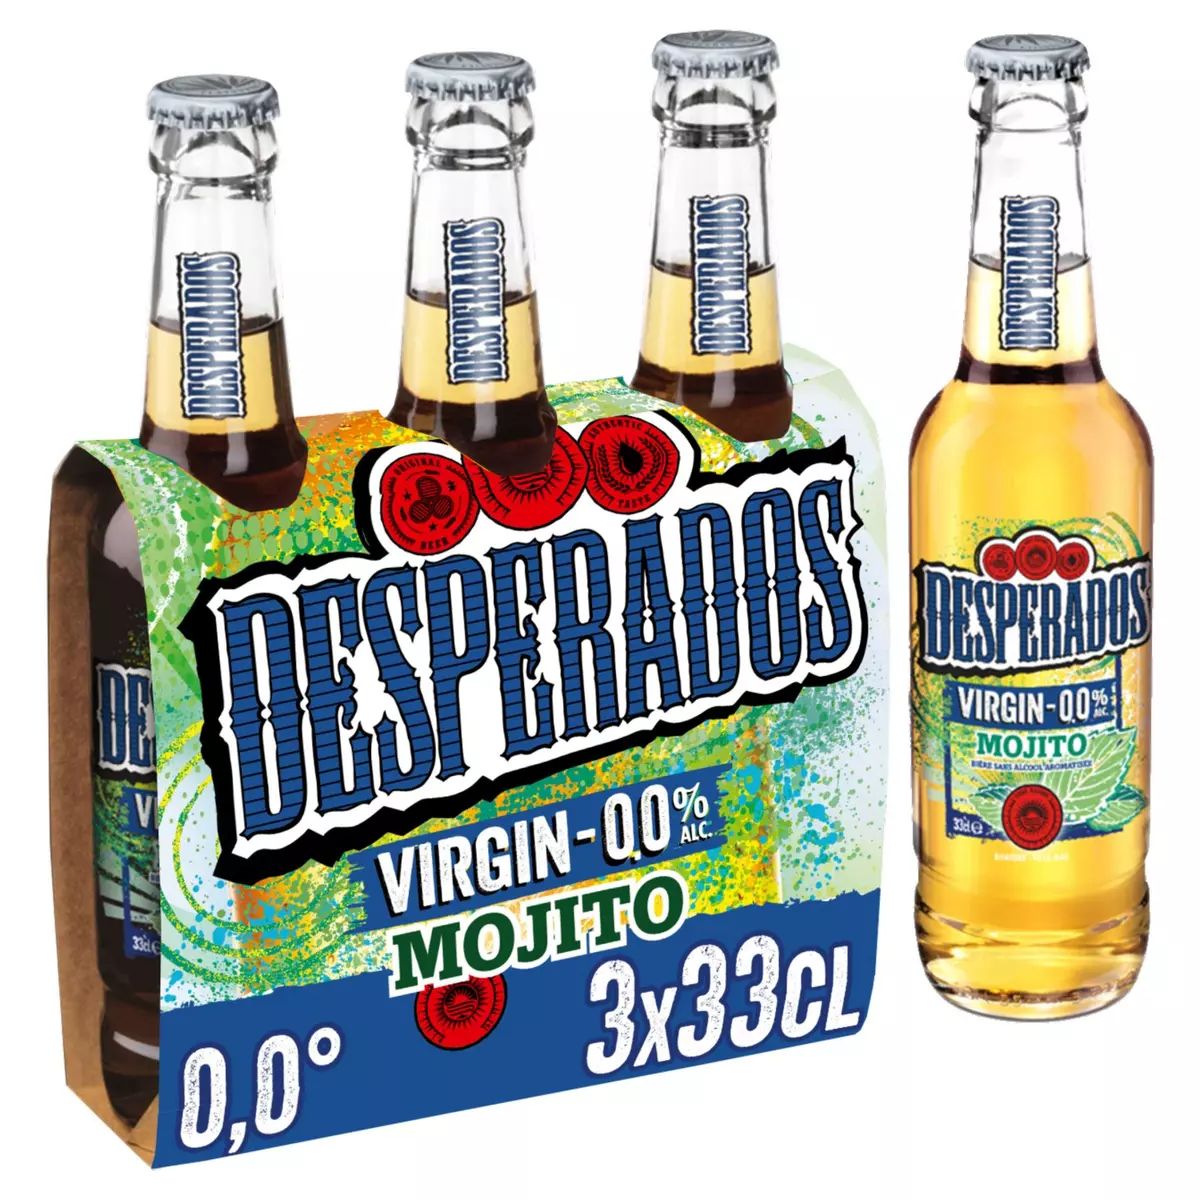 DESPERADOS Bière blonde arôme Virgin mojito sans alcool 0,0% bouteilles 3x33cl